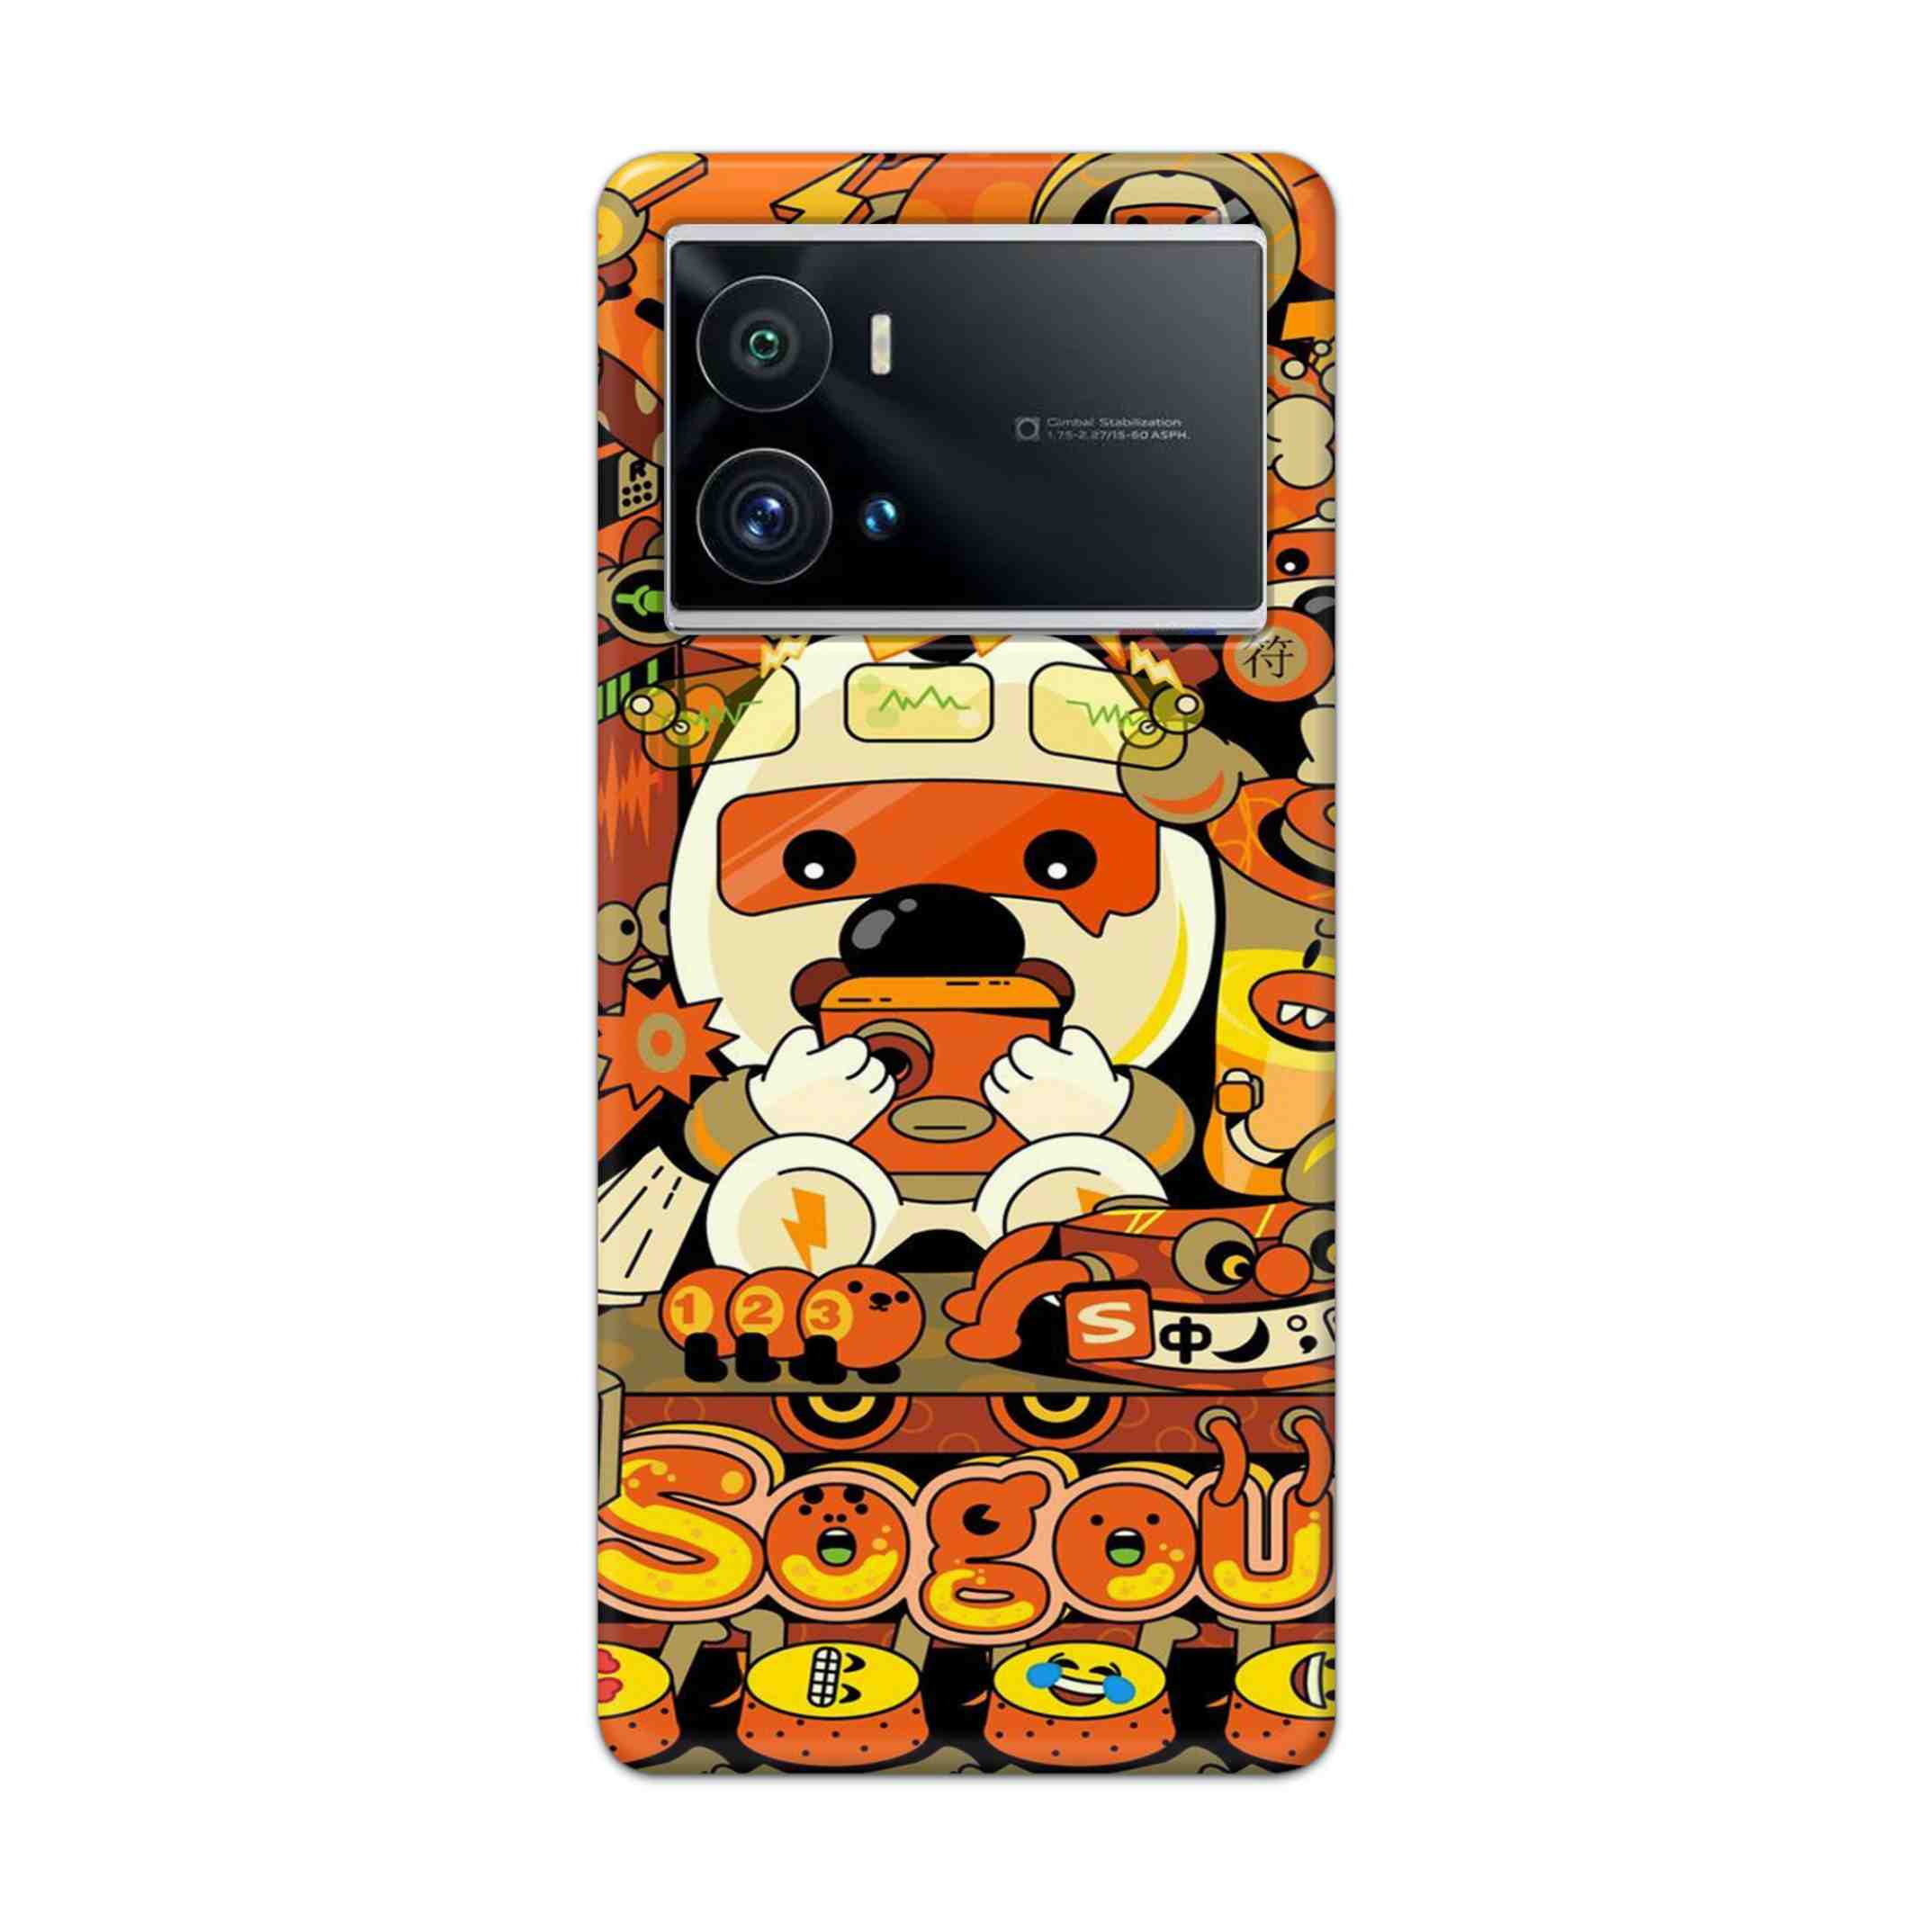 Buy Sogou Hard Back Mobile Phone Case Cover For iQOO 9 Pro 5G Online